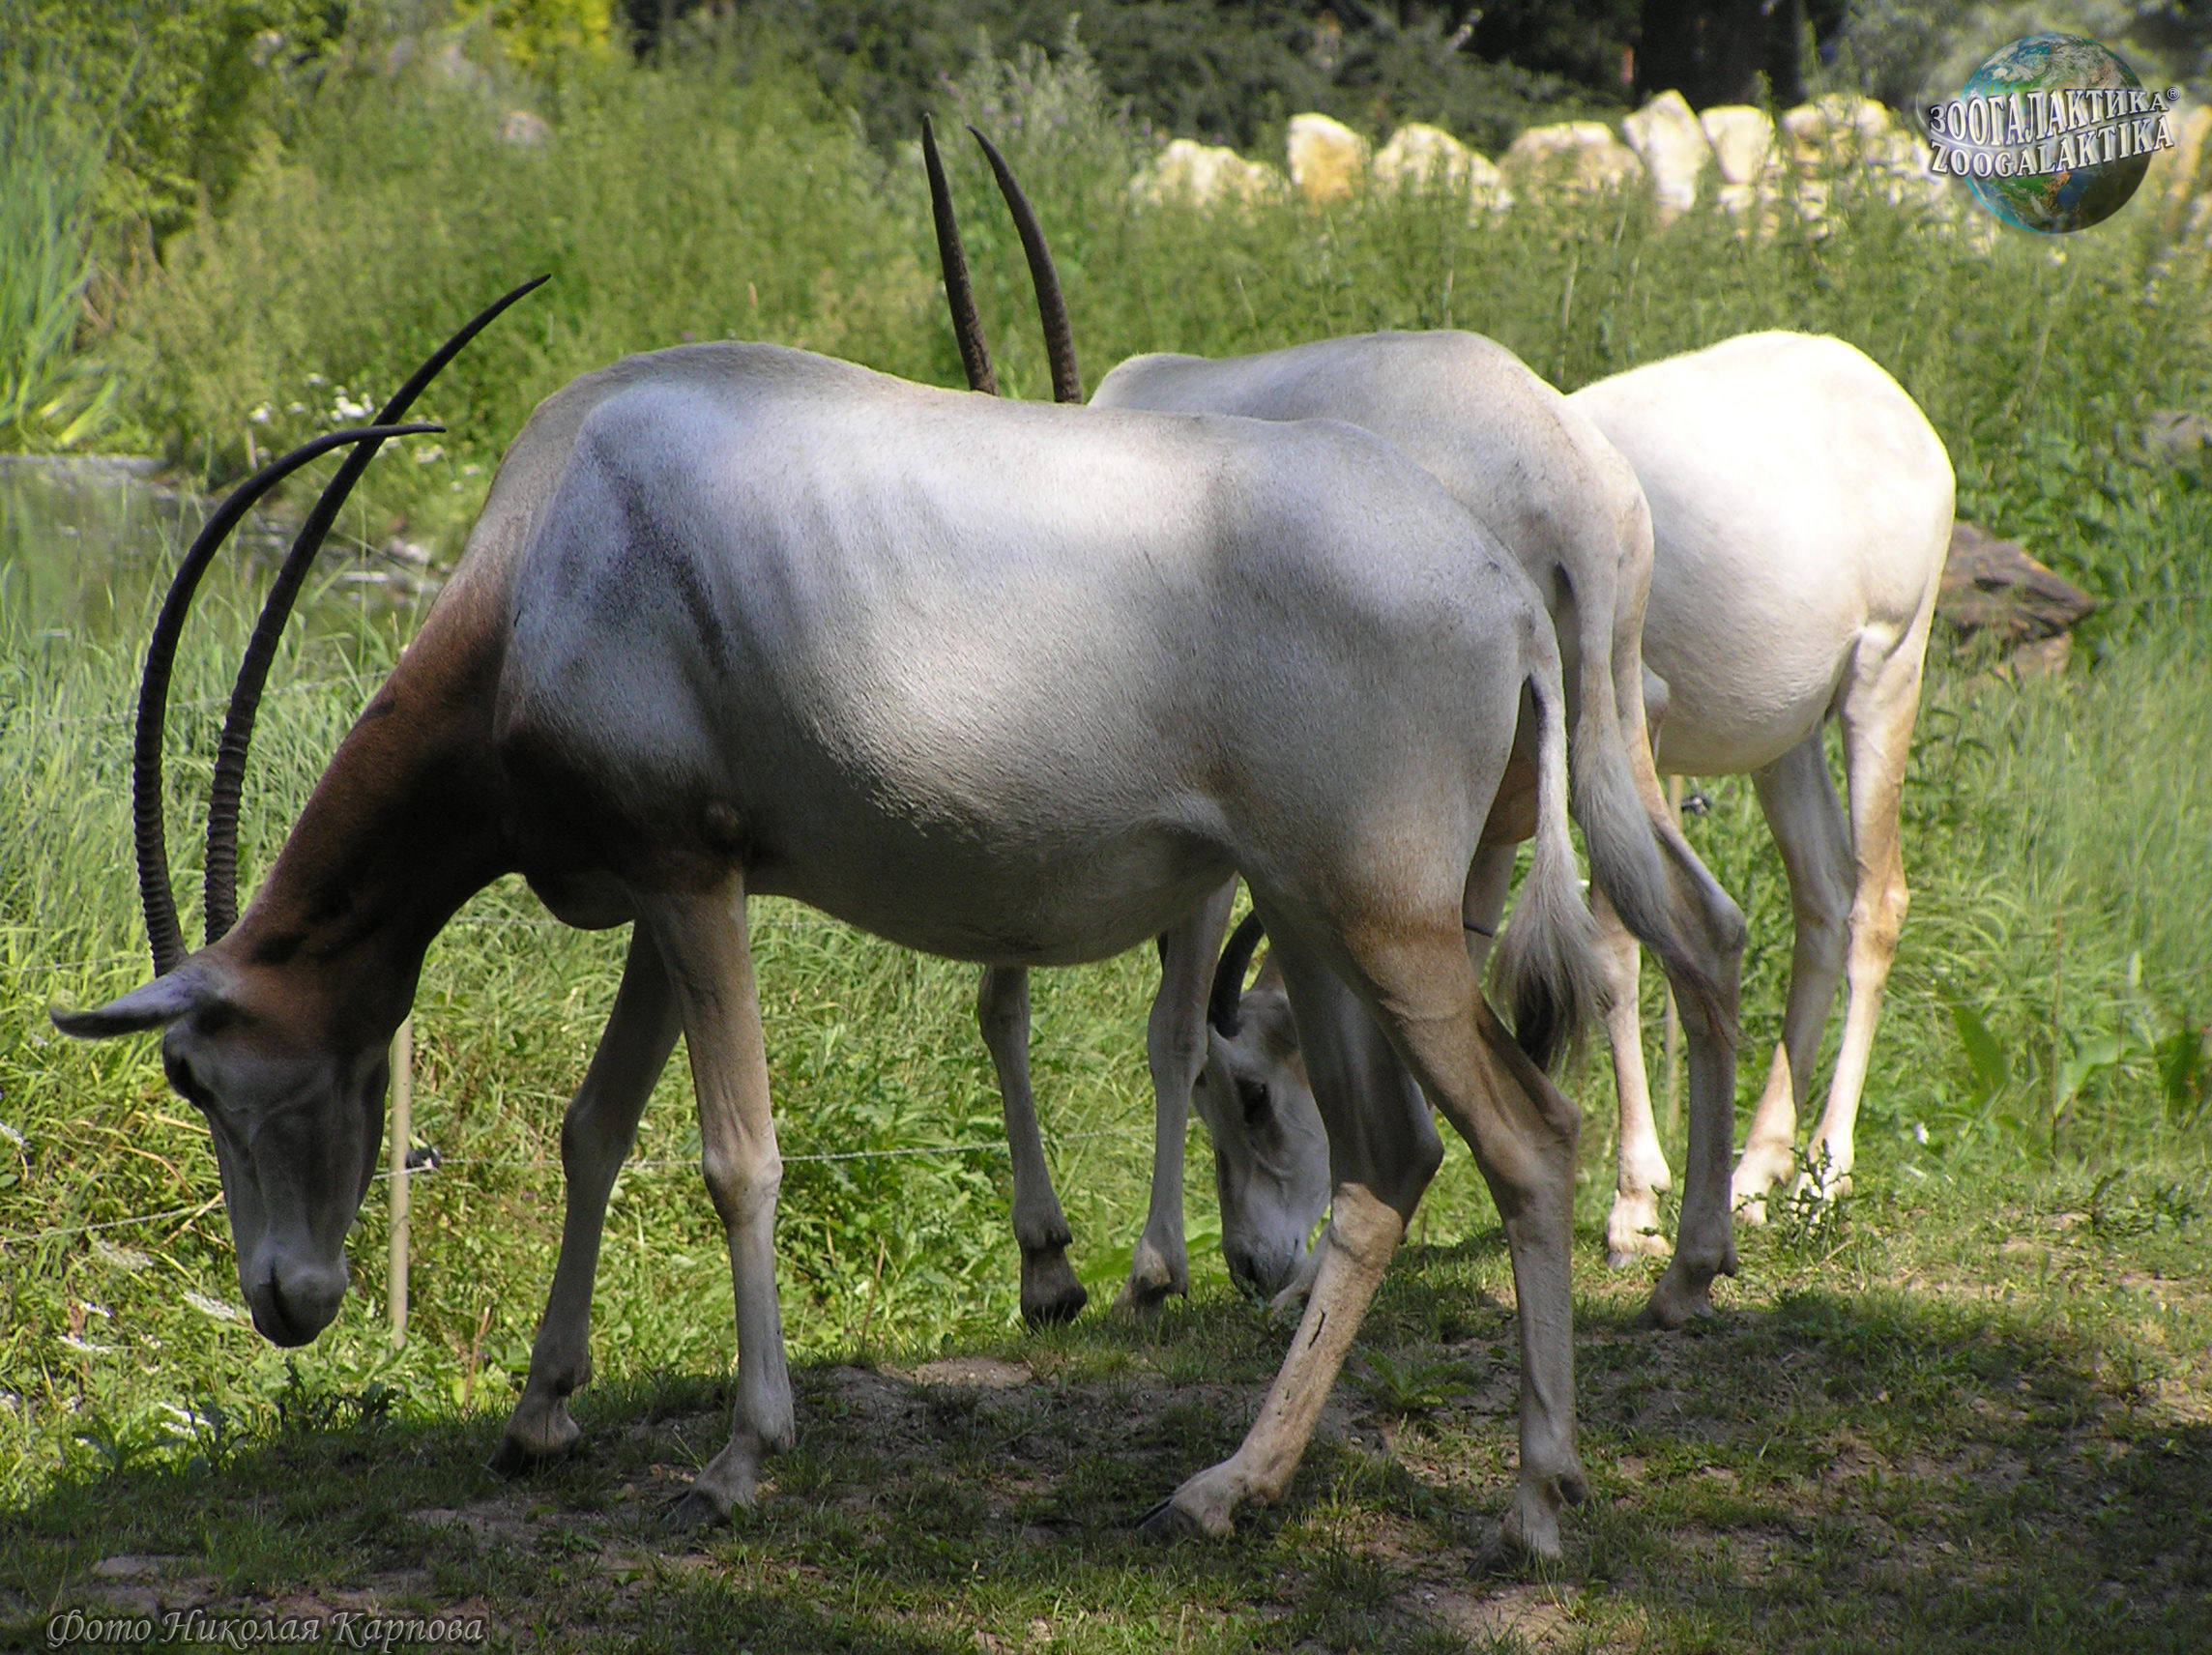 Саблерогая антилопа. Антилопа нильгау. Scimitar-Horned Oryx. Антилопа Орикс. Саблерогая антилопа из африки 5 букв